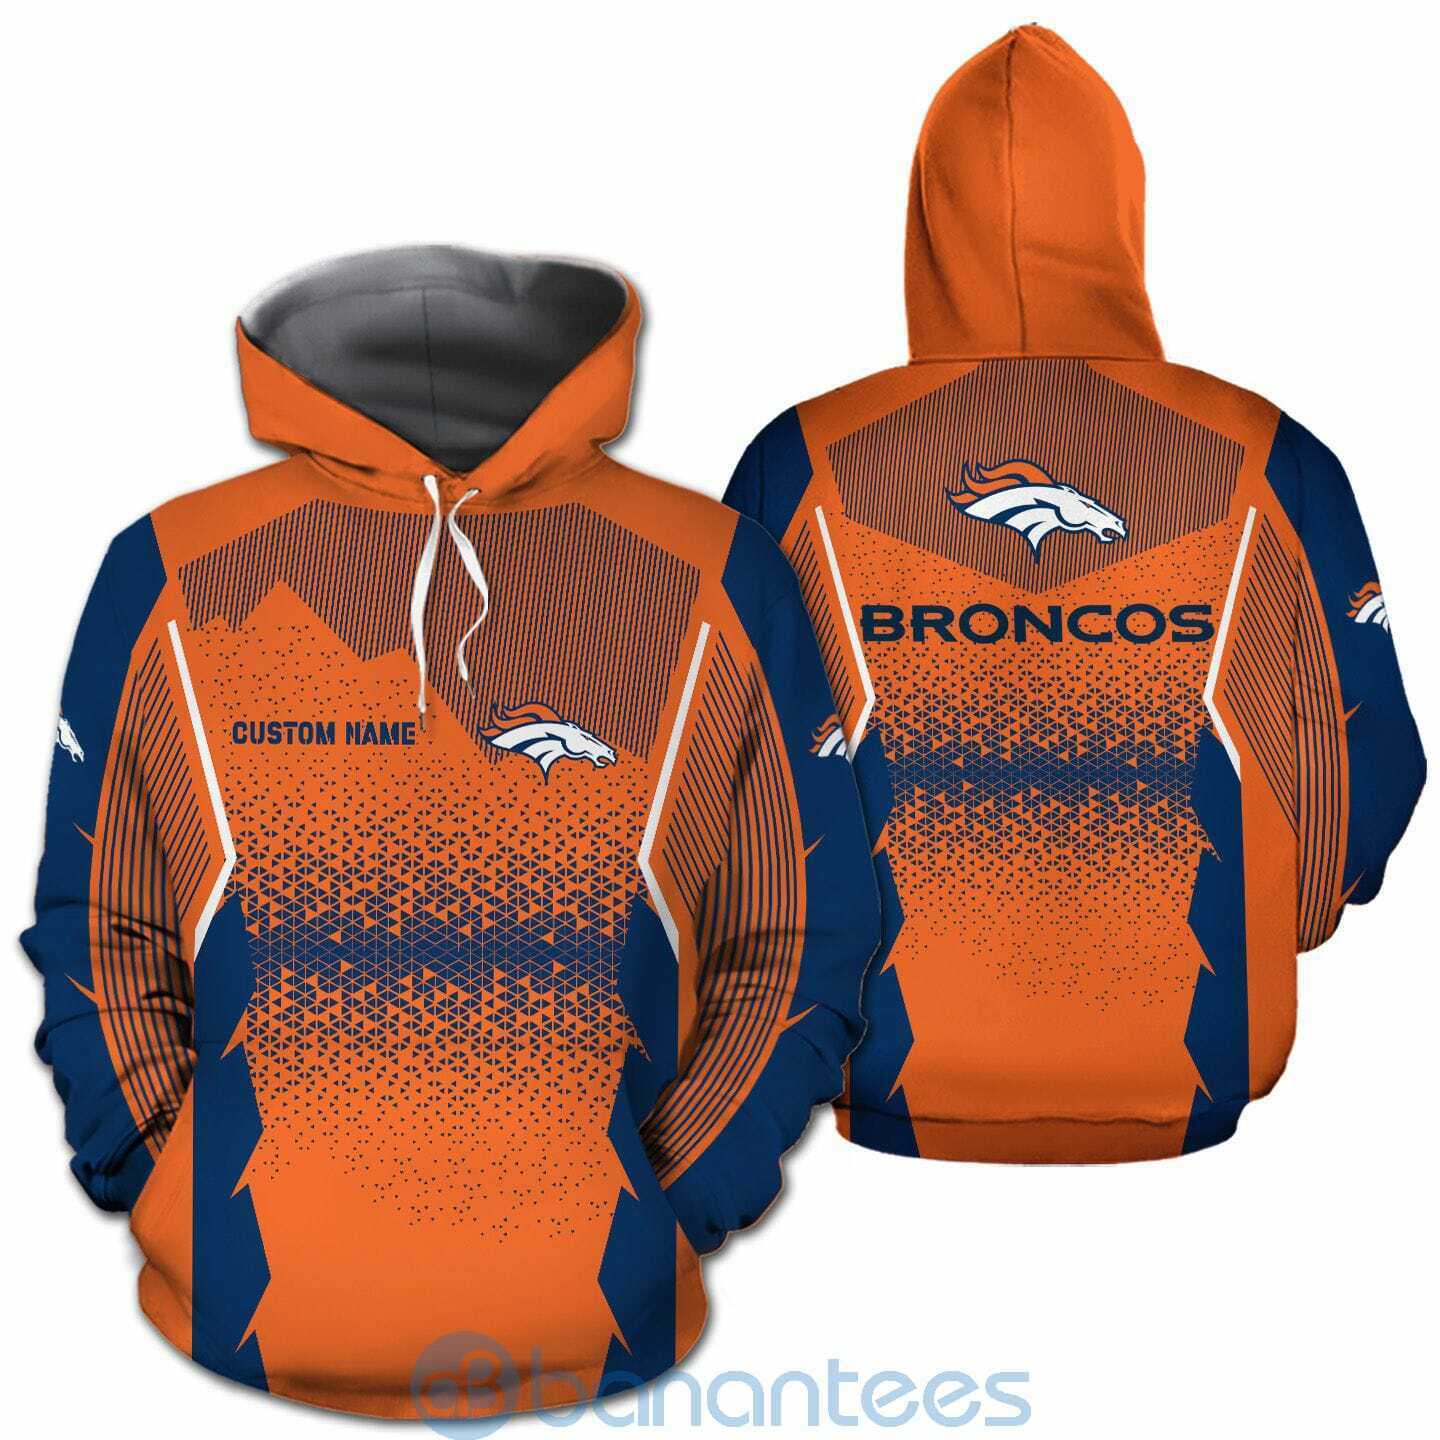 Denver Broncos NFL Football Team Custom Name 3D All Over Printed Shirt For Fans